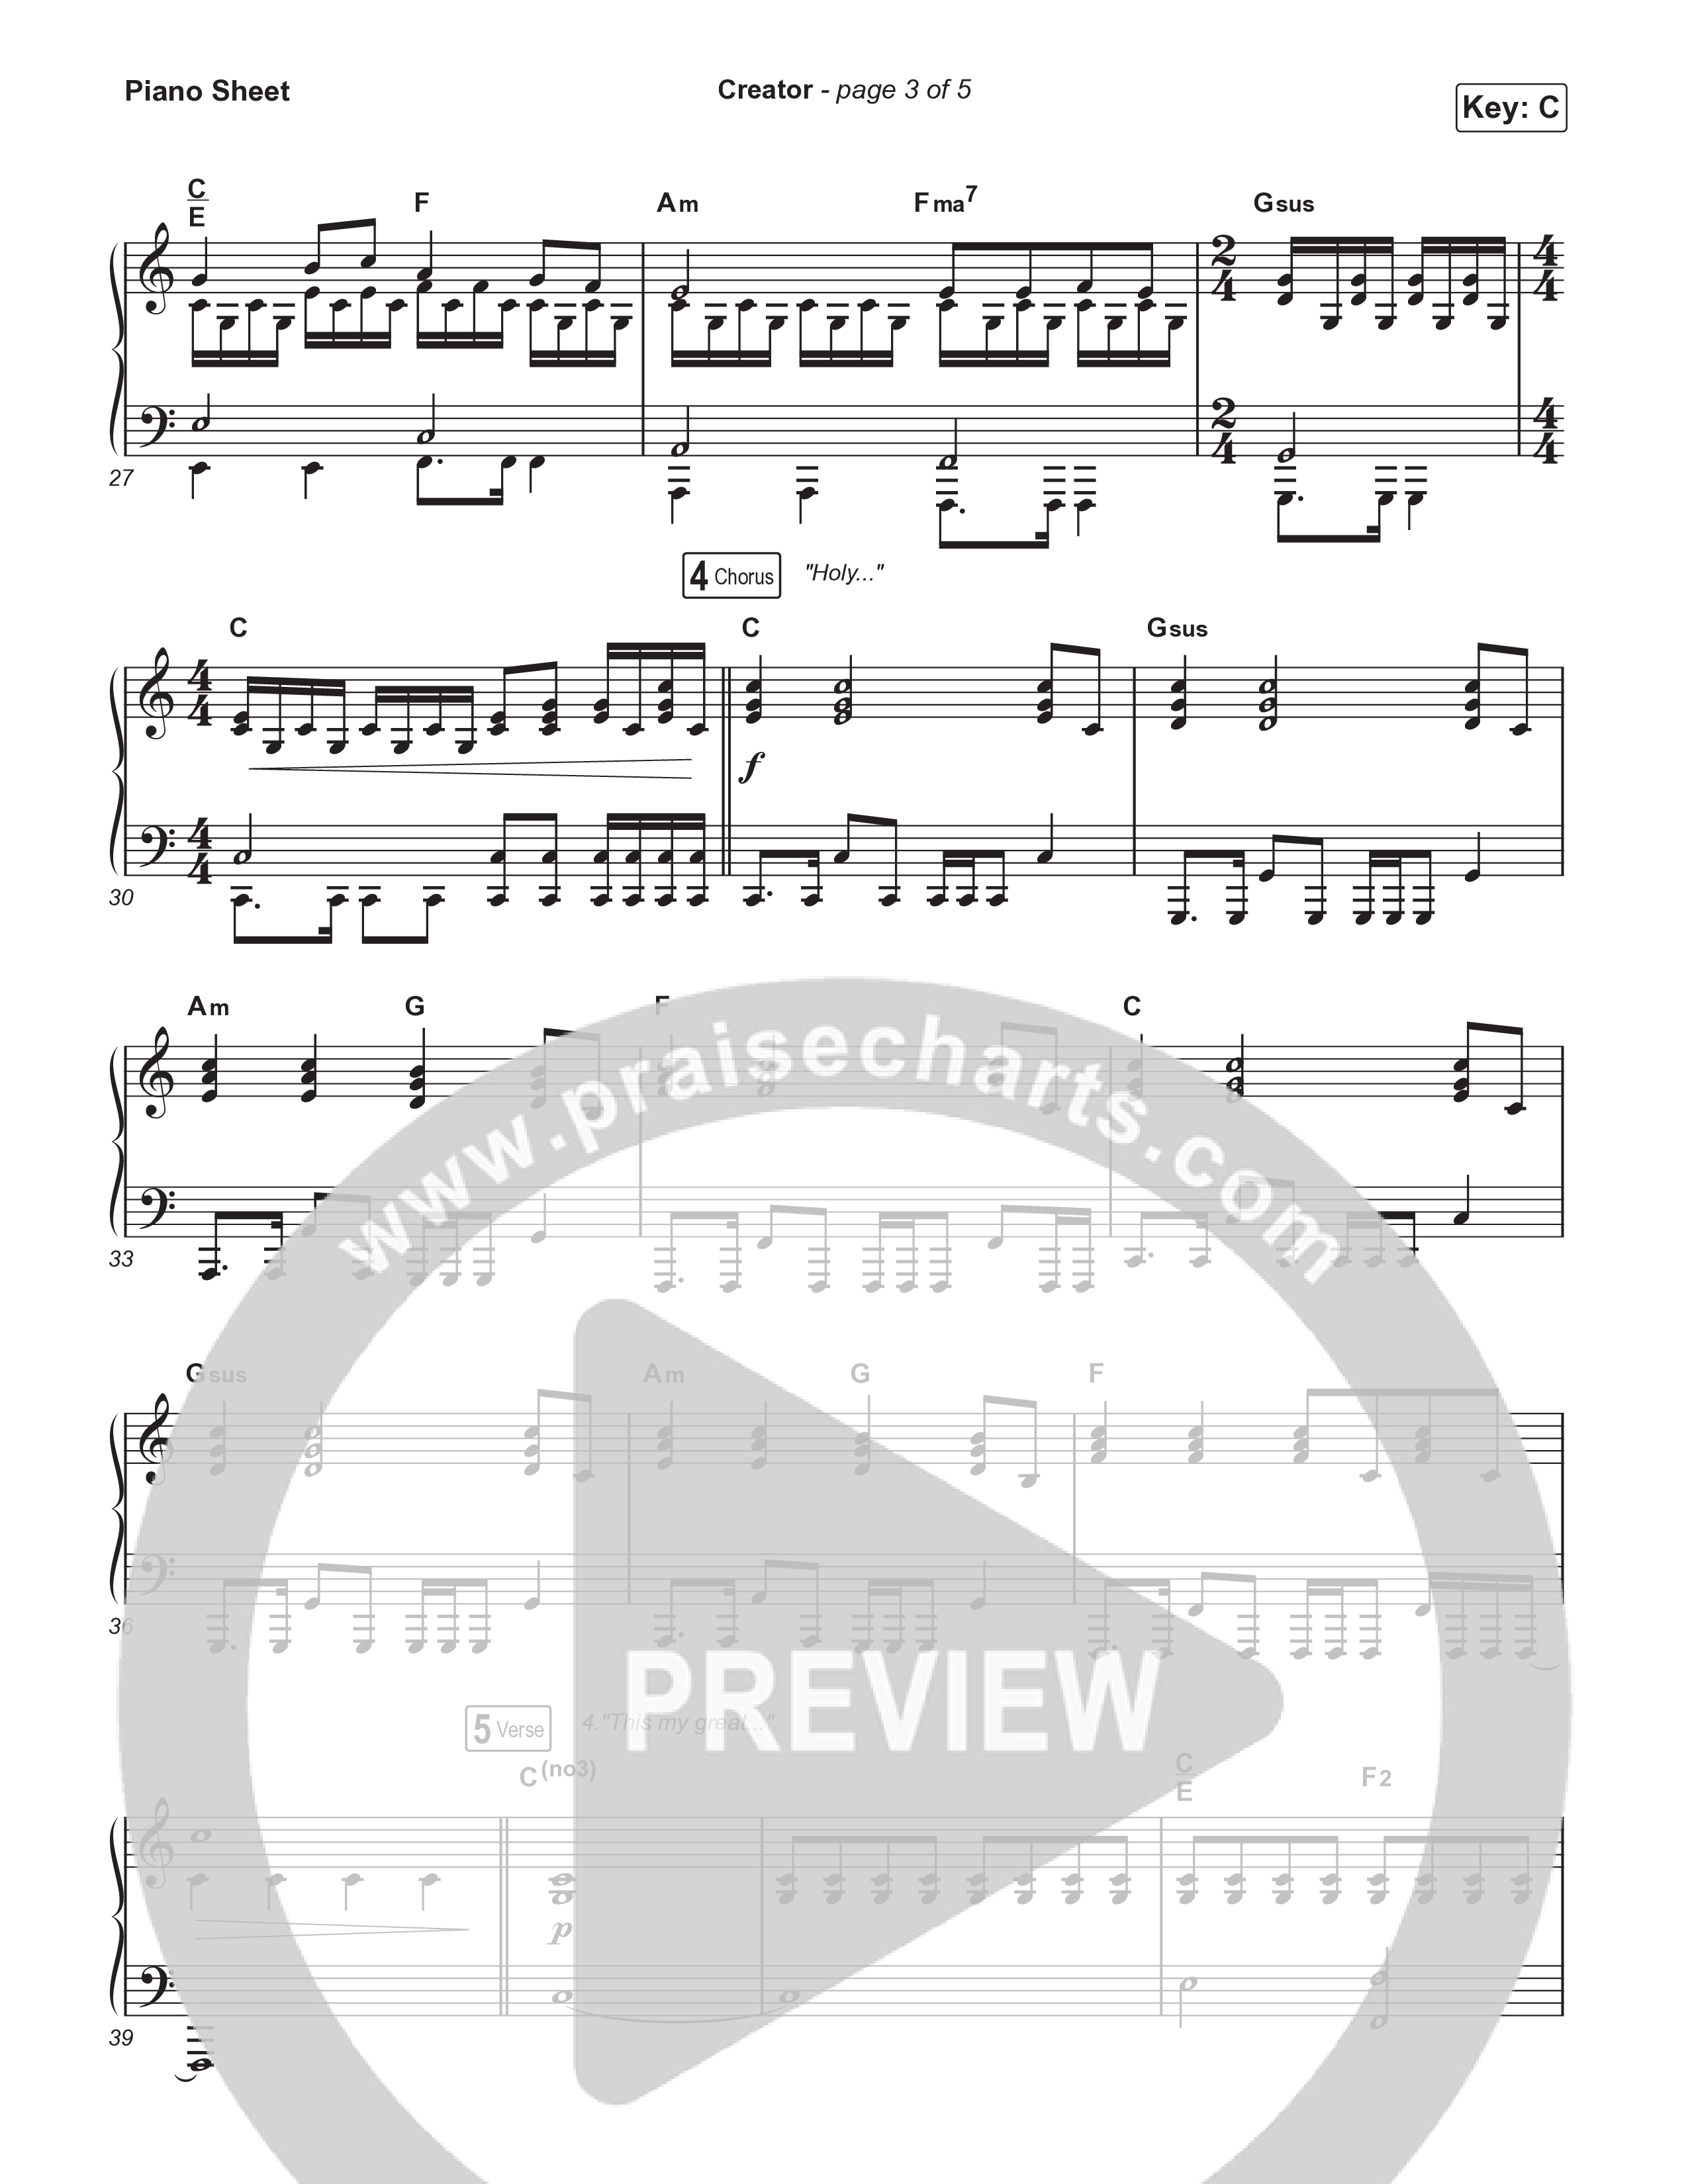 Creator (Unison/2-Part) Piano Sheet (Phil Wickham)